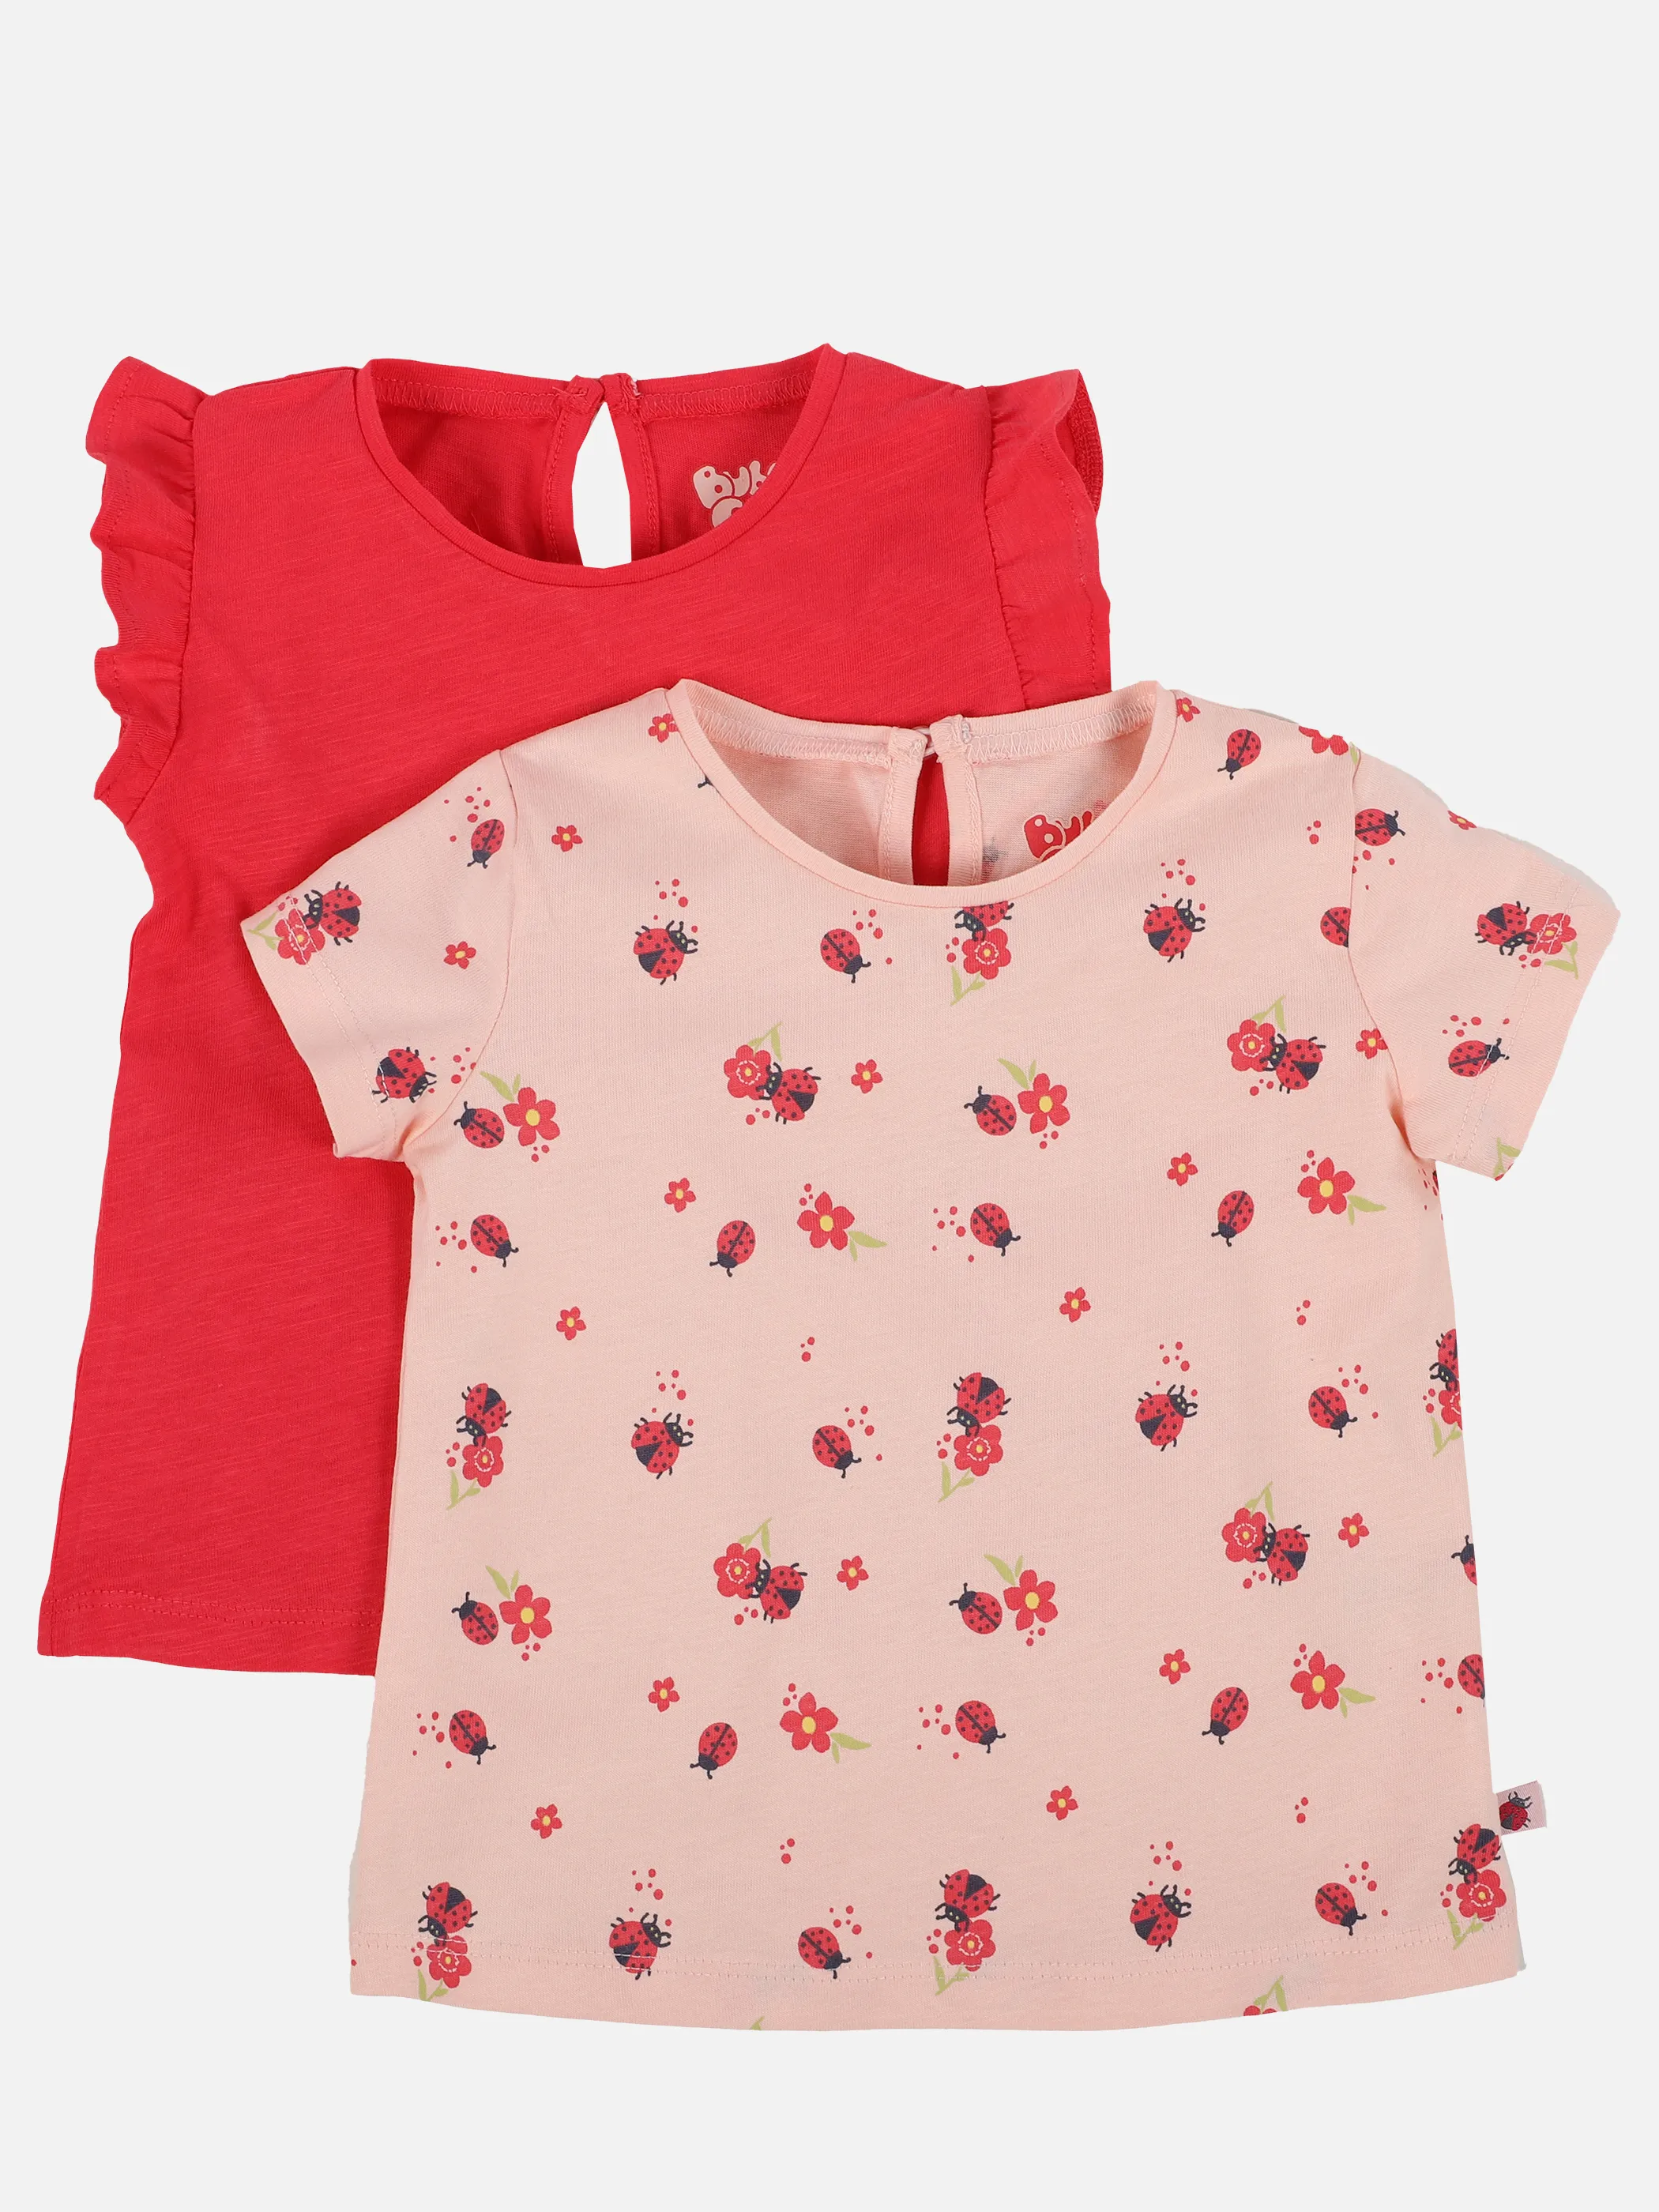 Bubble Gum BM 2er Pack T-Shirts in uni rot und rosa AOP Rosa 892633 ROSA/ROT 1